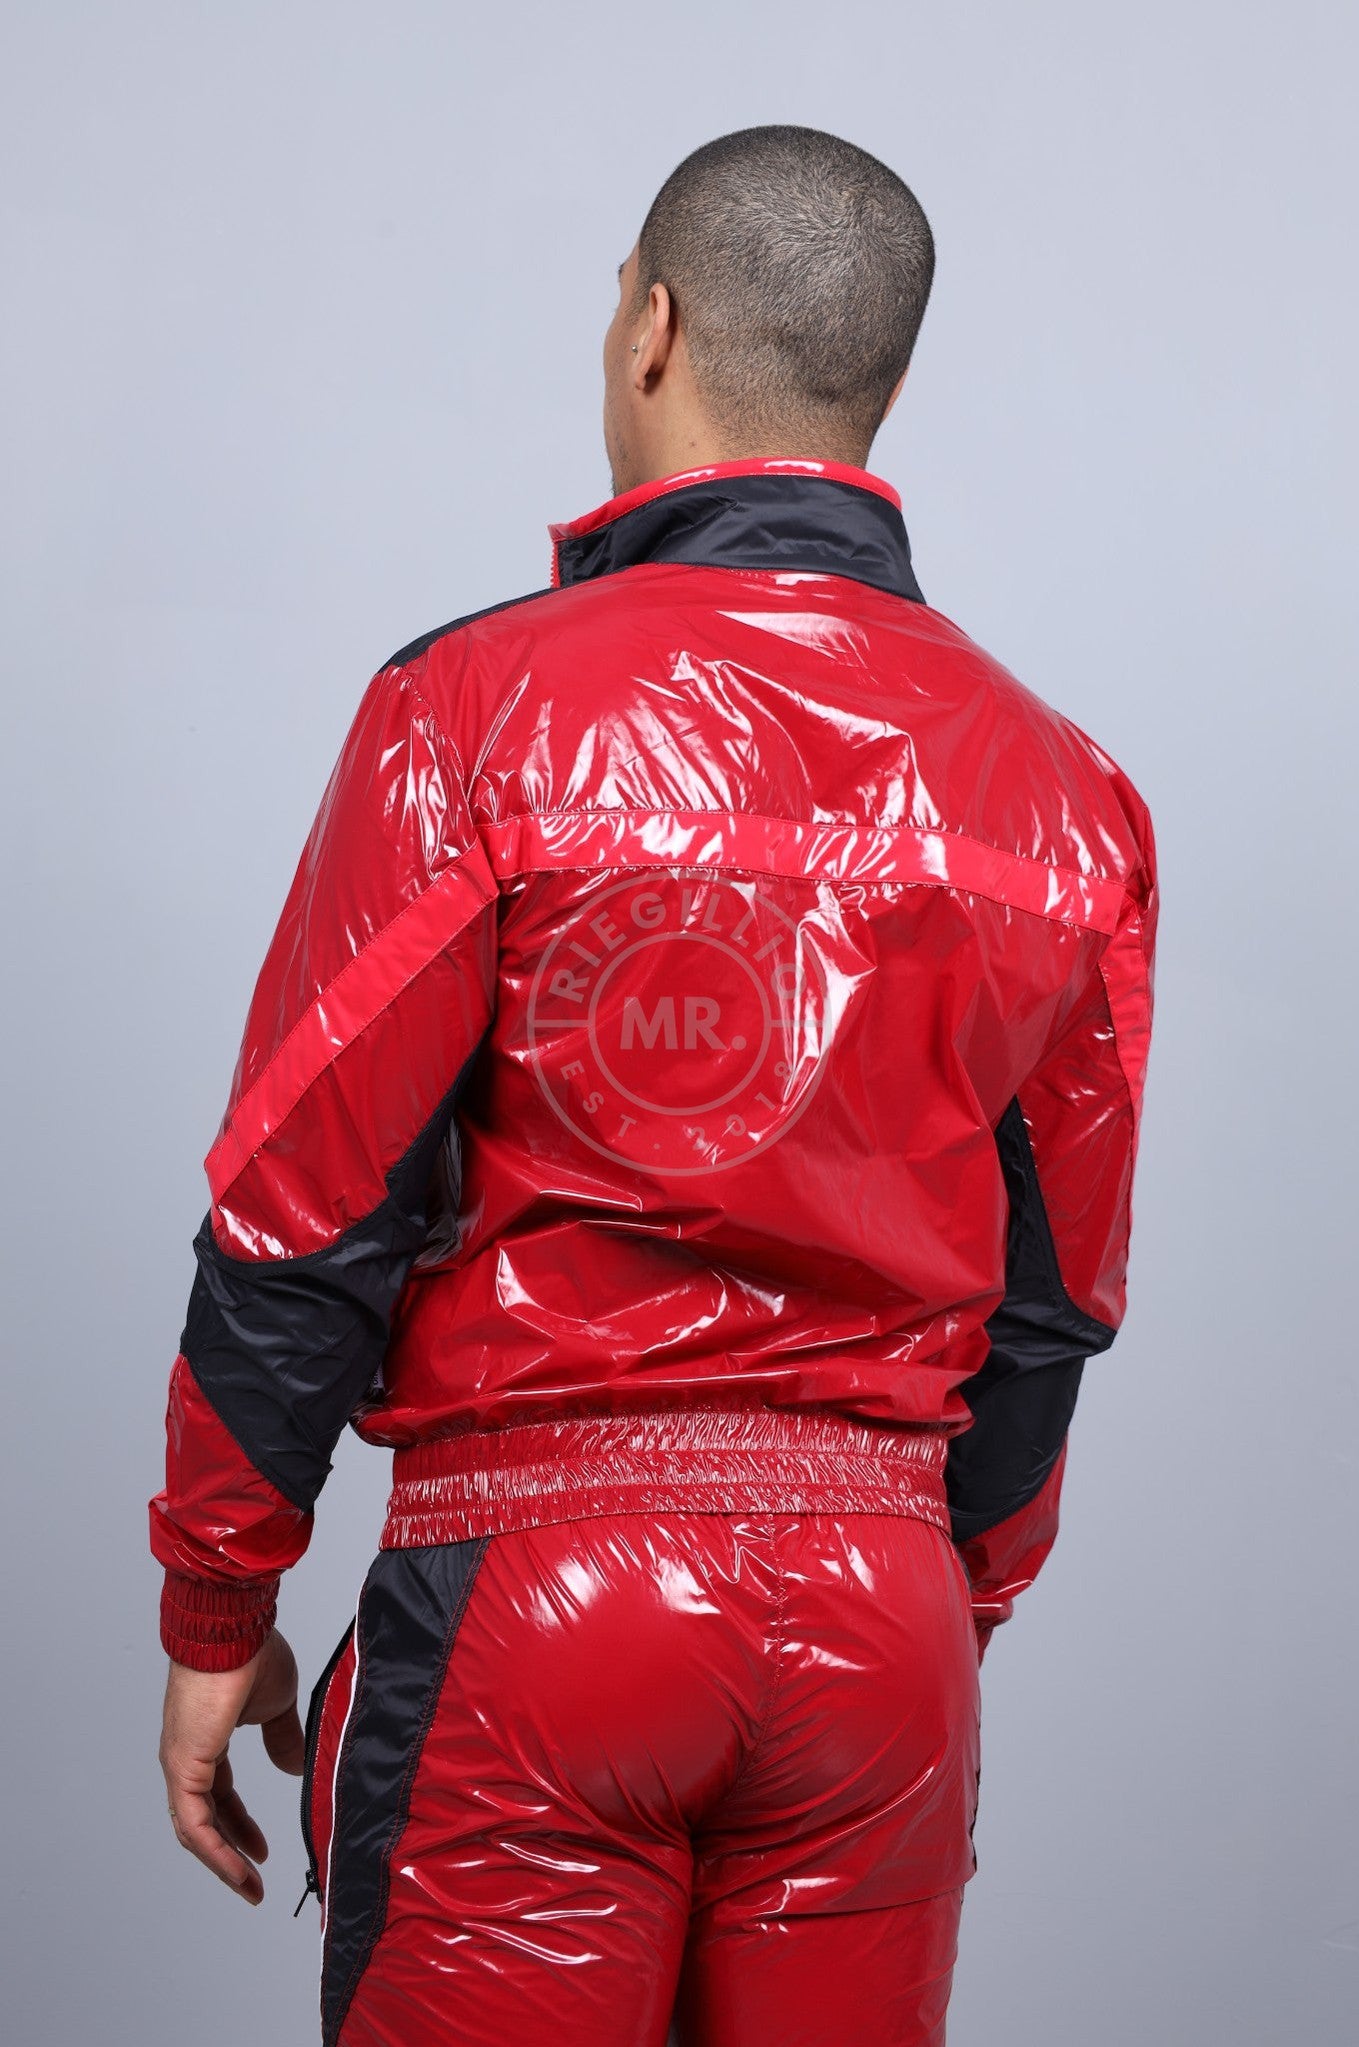 Shiny Nylon 24 Tracksuit Jacket - Red at MR. Riegillio